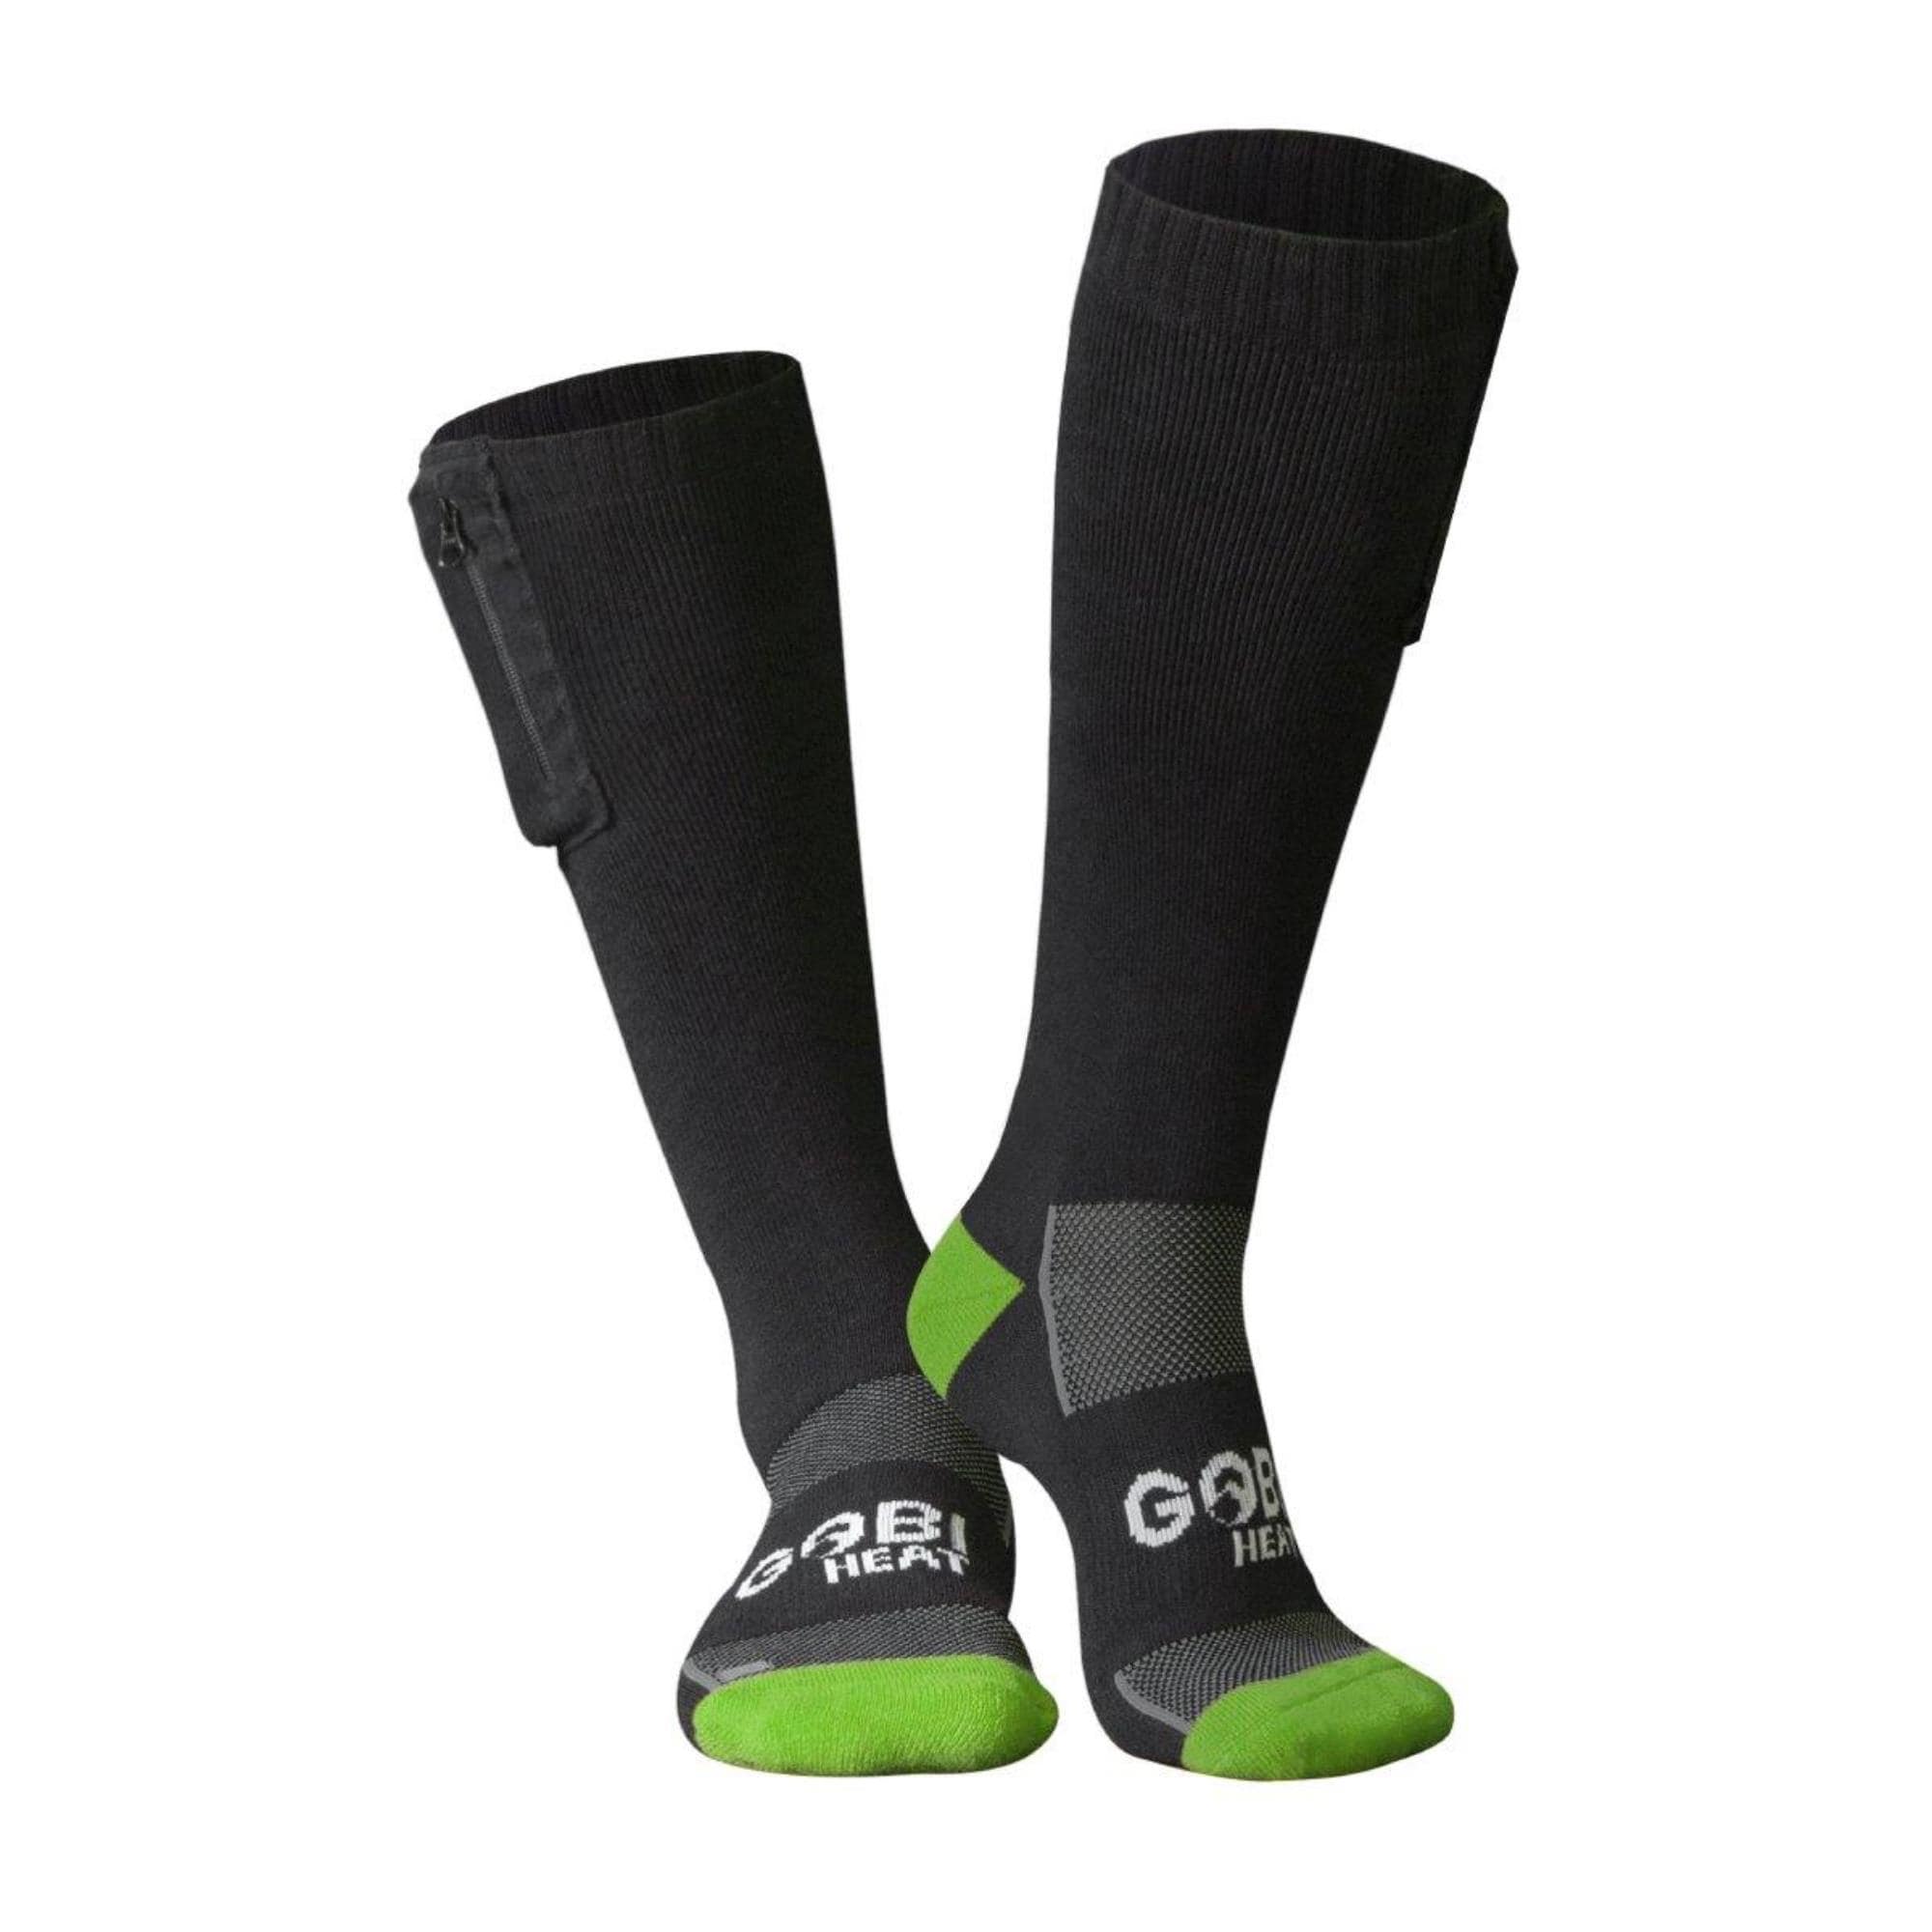 Gobi Heat Unisex Medium Synthetic Socks (2-Pack) in the Socks